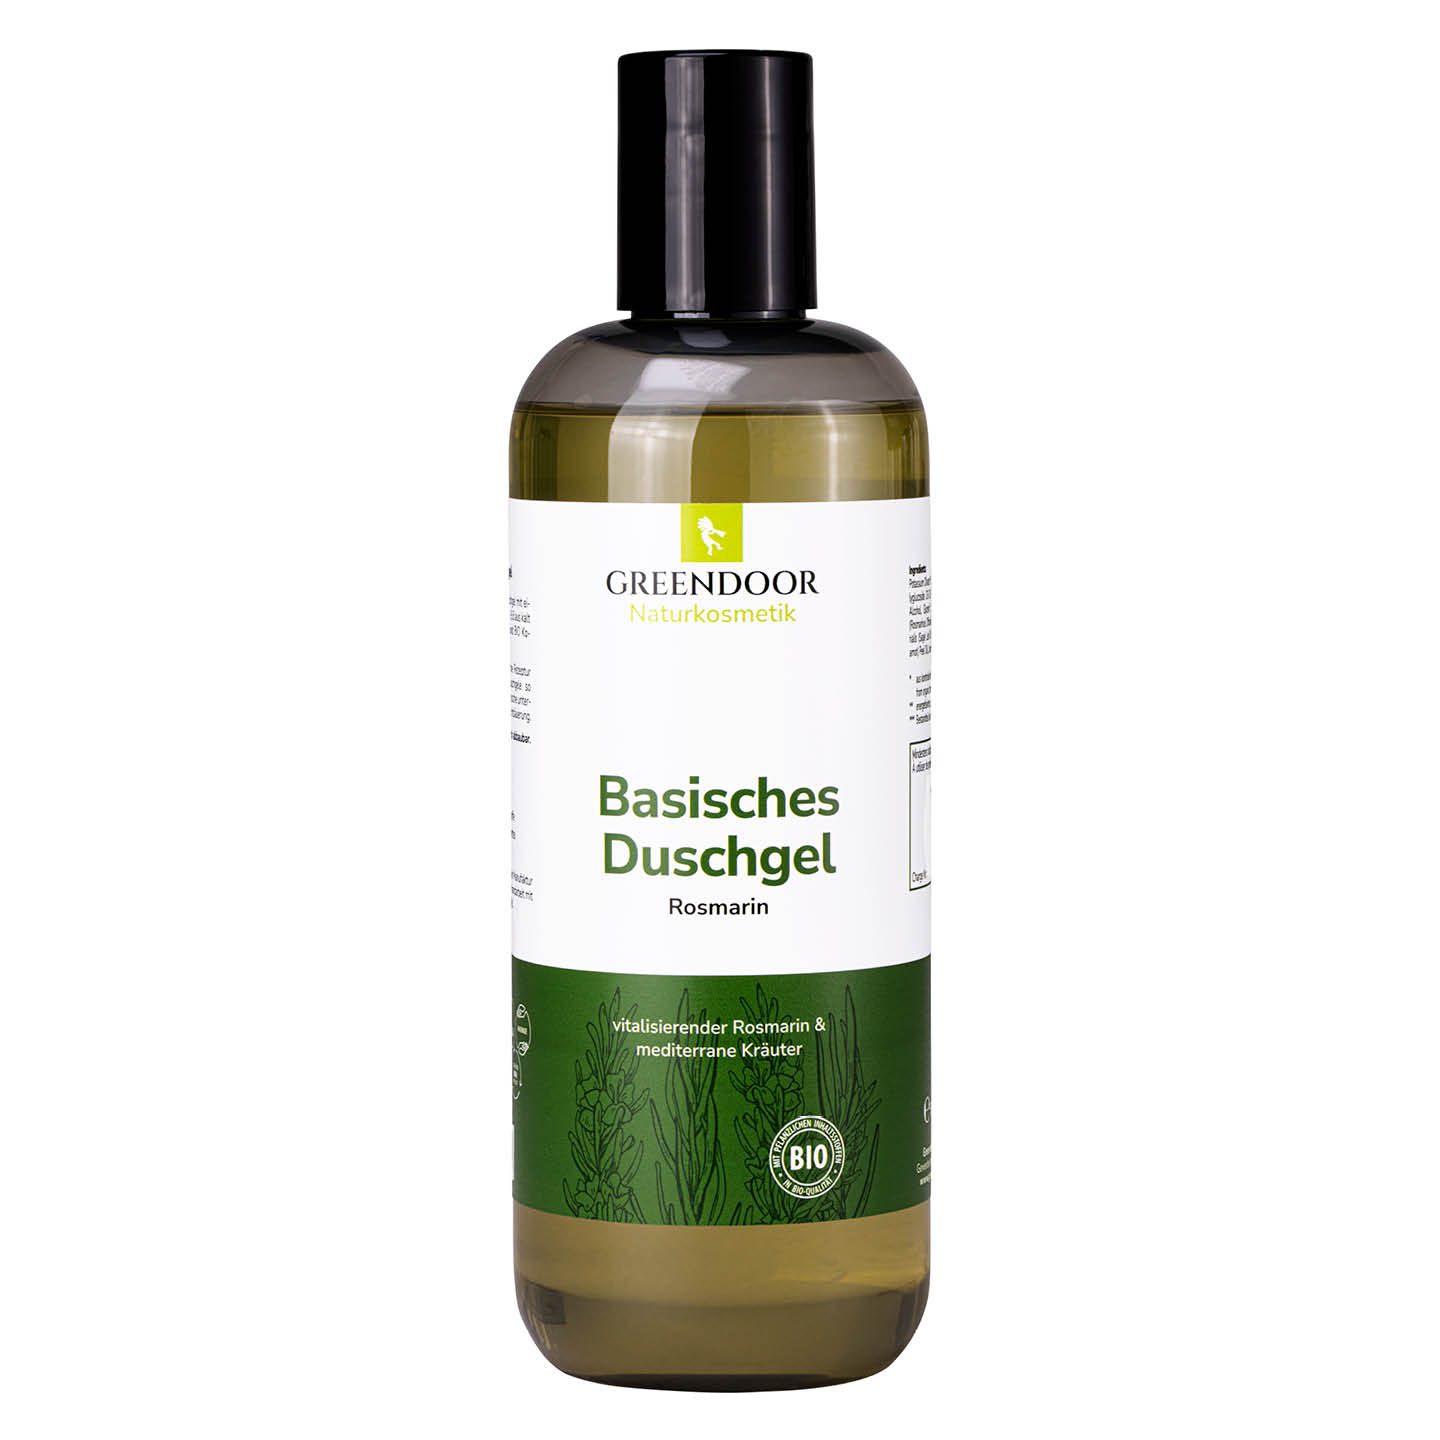 Basisches Natur Duschgel Rosmarin, 500ml vegan, Naturkosmetik bio abbaubar, outdoor geeignet